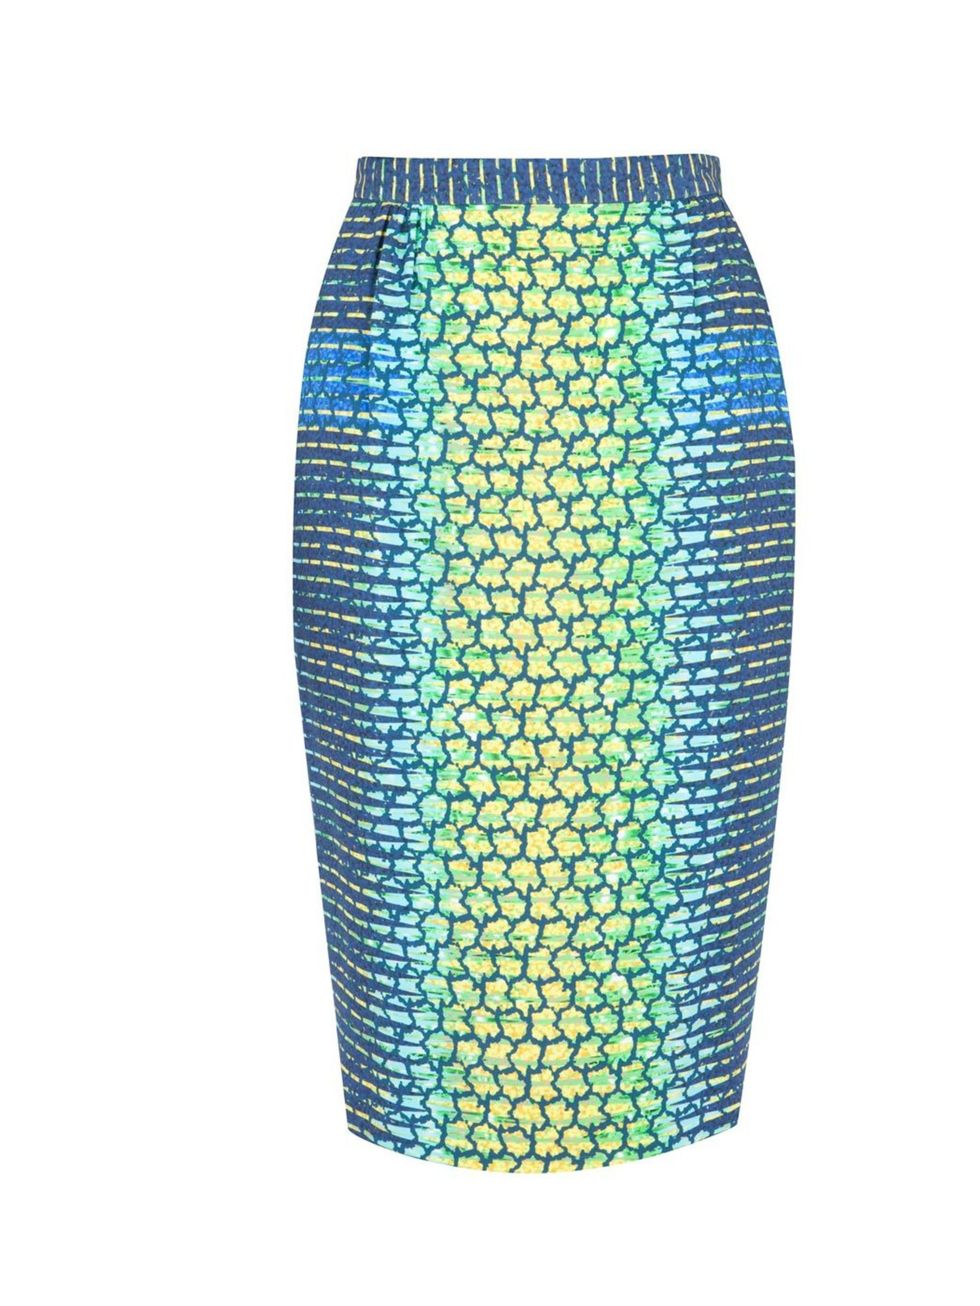 <p>Peter Pilotto net print skirt, £450, at <a href="http://www.harveynichols.com/womens/categories-1/designer-skirts/knee-length/s393259-ruler-navy-net-print-skirt.html?colour=NAVY+AND+OTHER">Harvey Nichols</a></p>